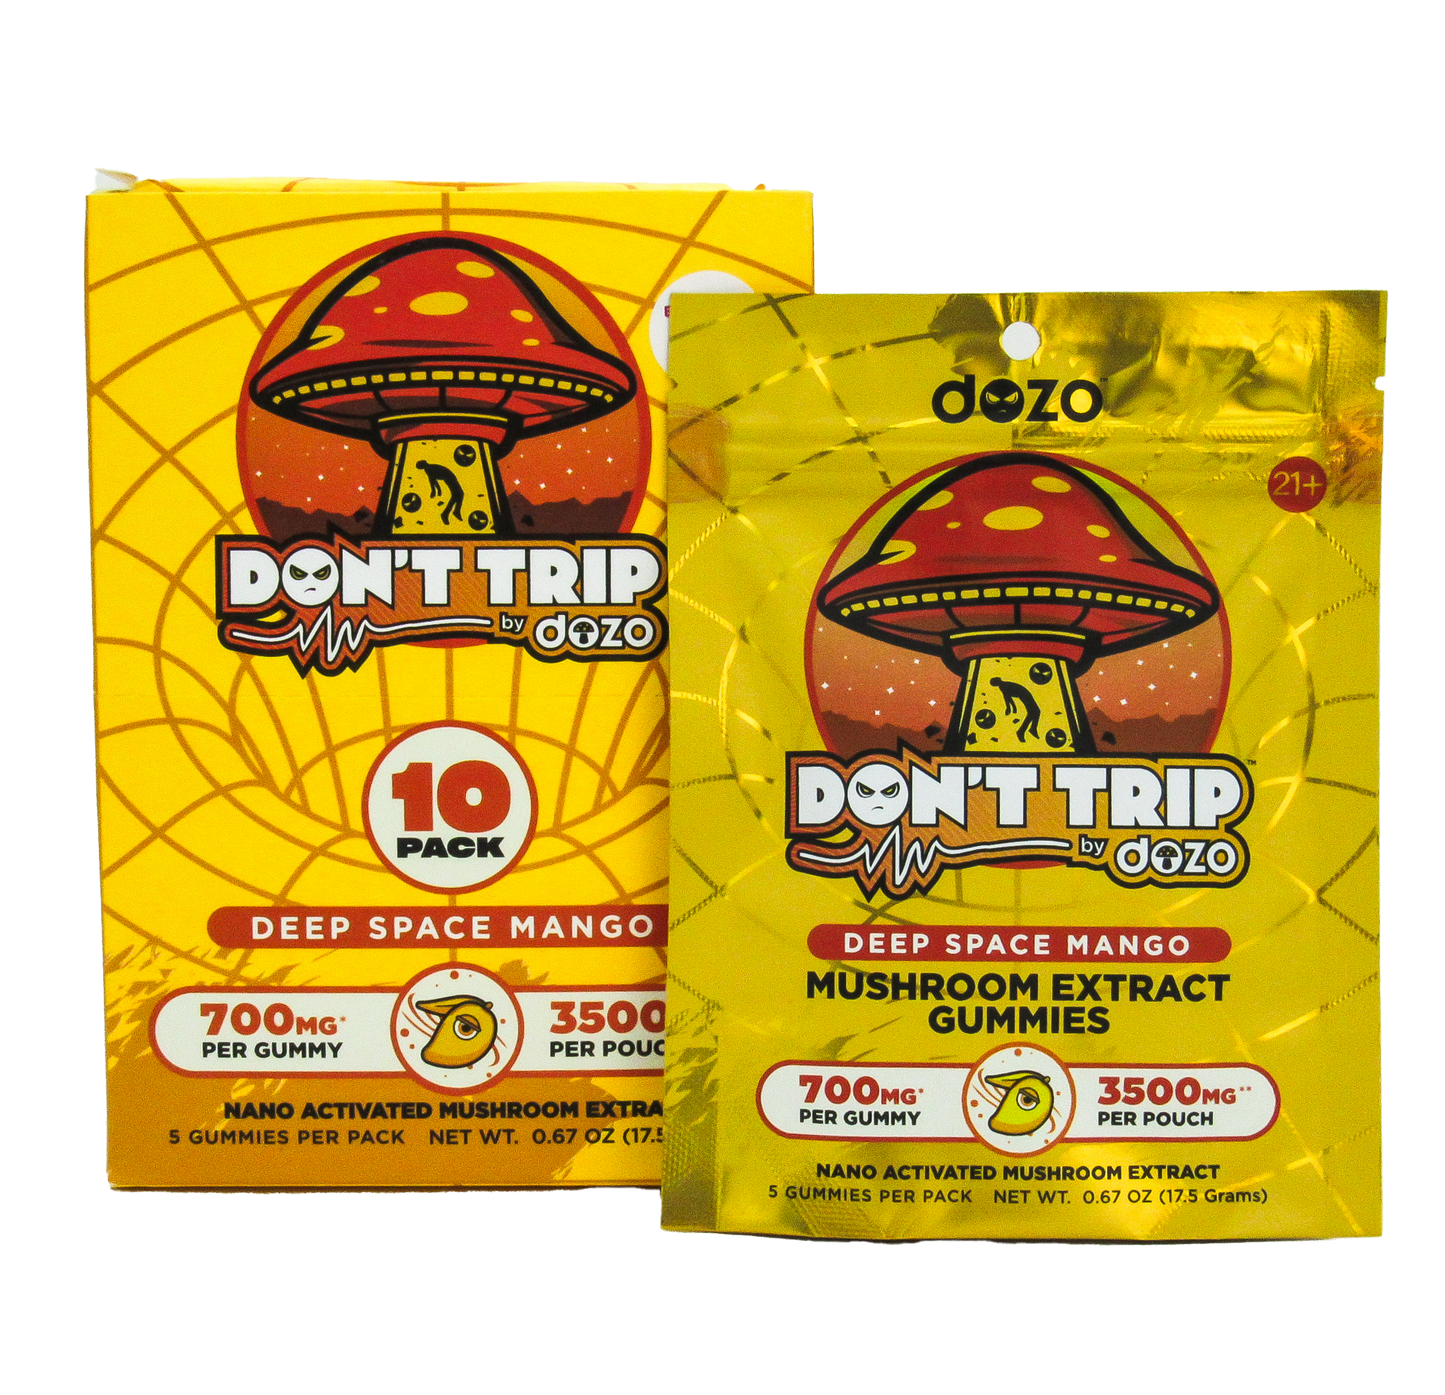 Dozo - "Don't Trip" Mushroom Gummies (10ct Box) - 3500mg per Pouch